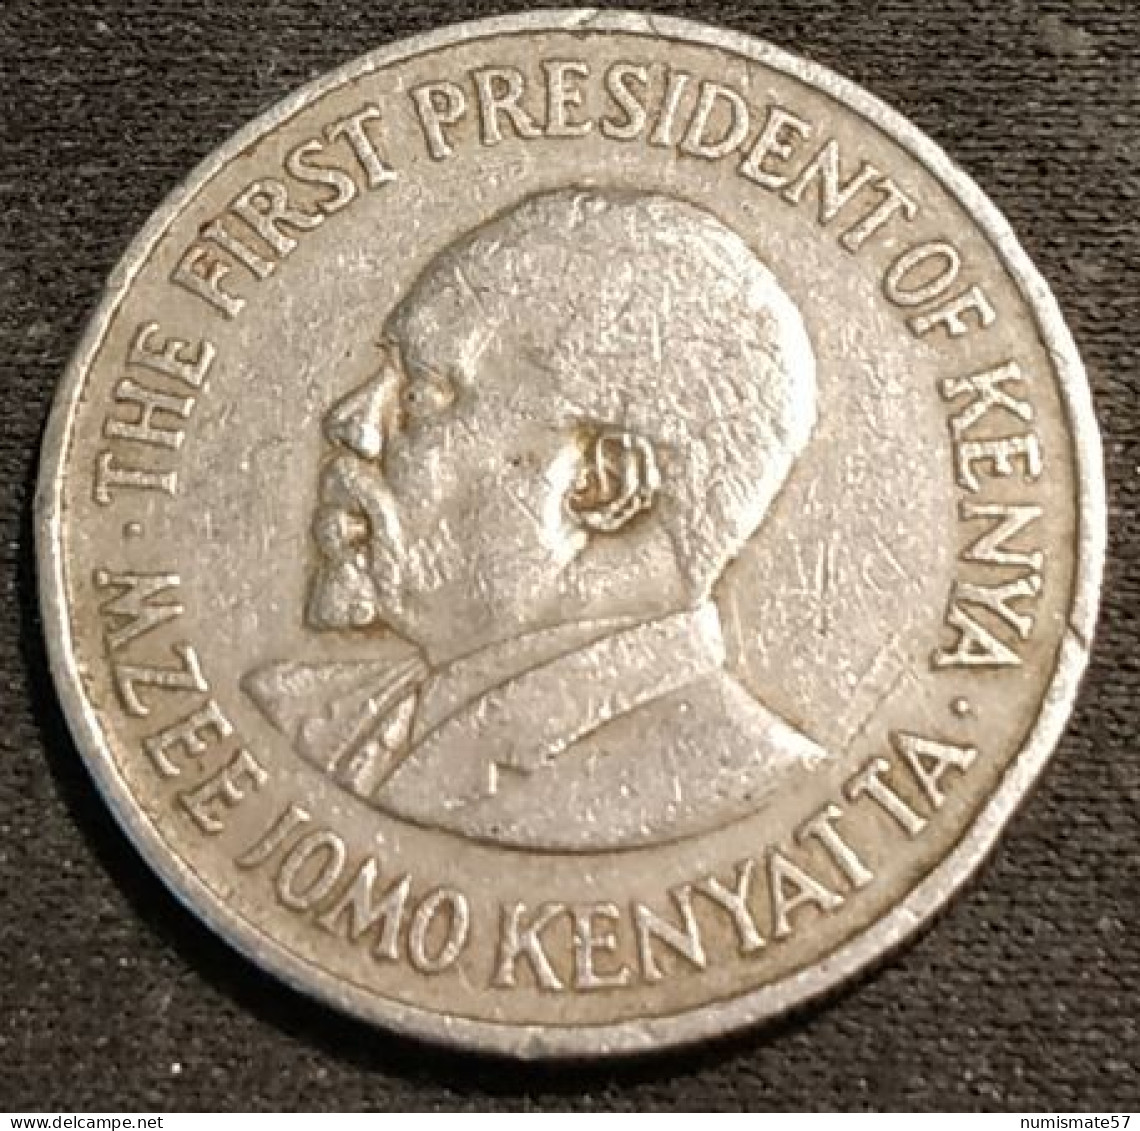 KENYA - 50 CENTS 1969 - Jomo Kenyatta - Avec Légende - KM 13 - Kenia